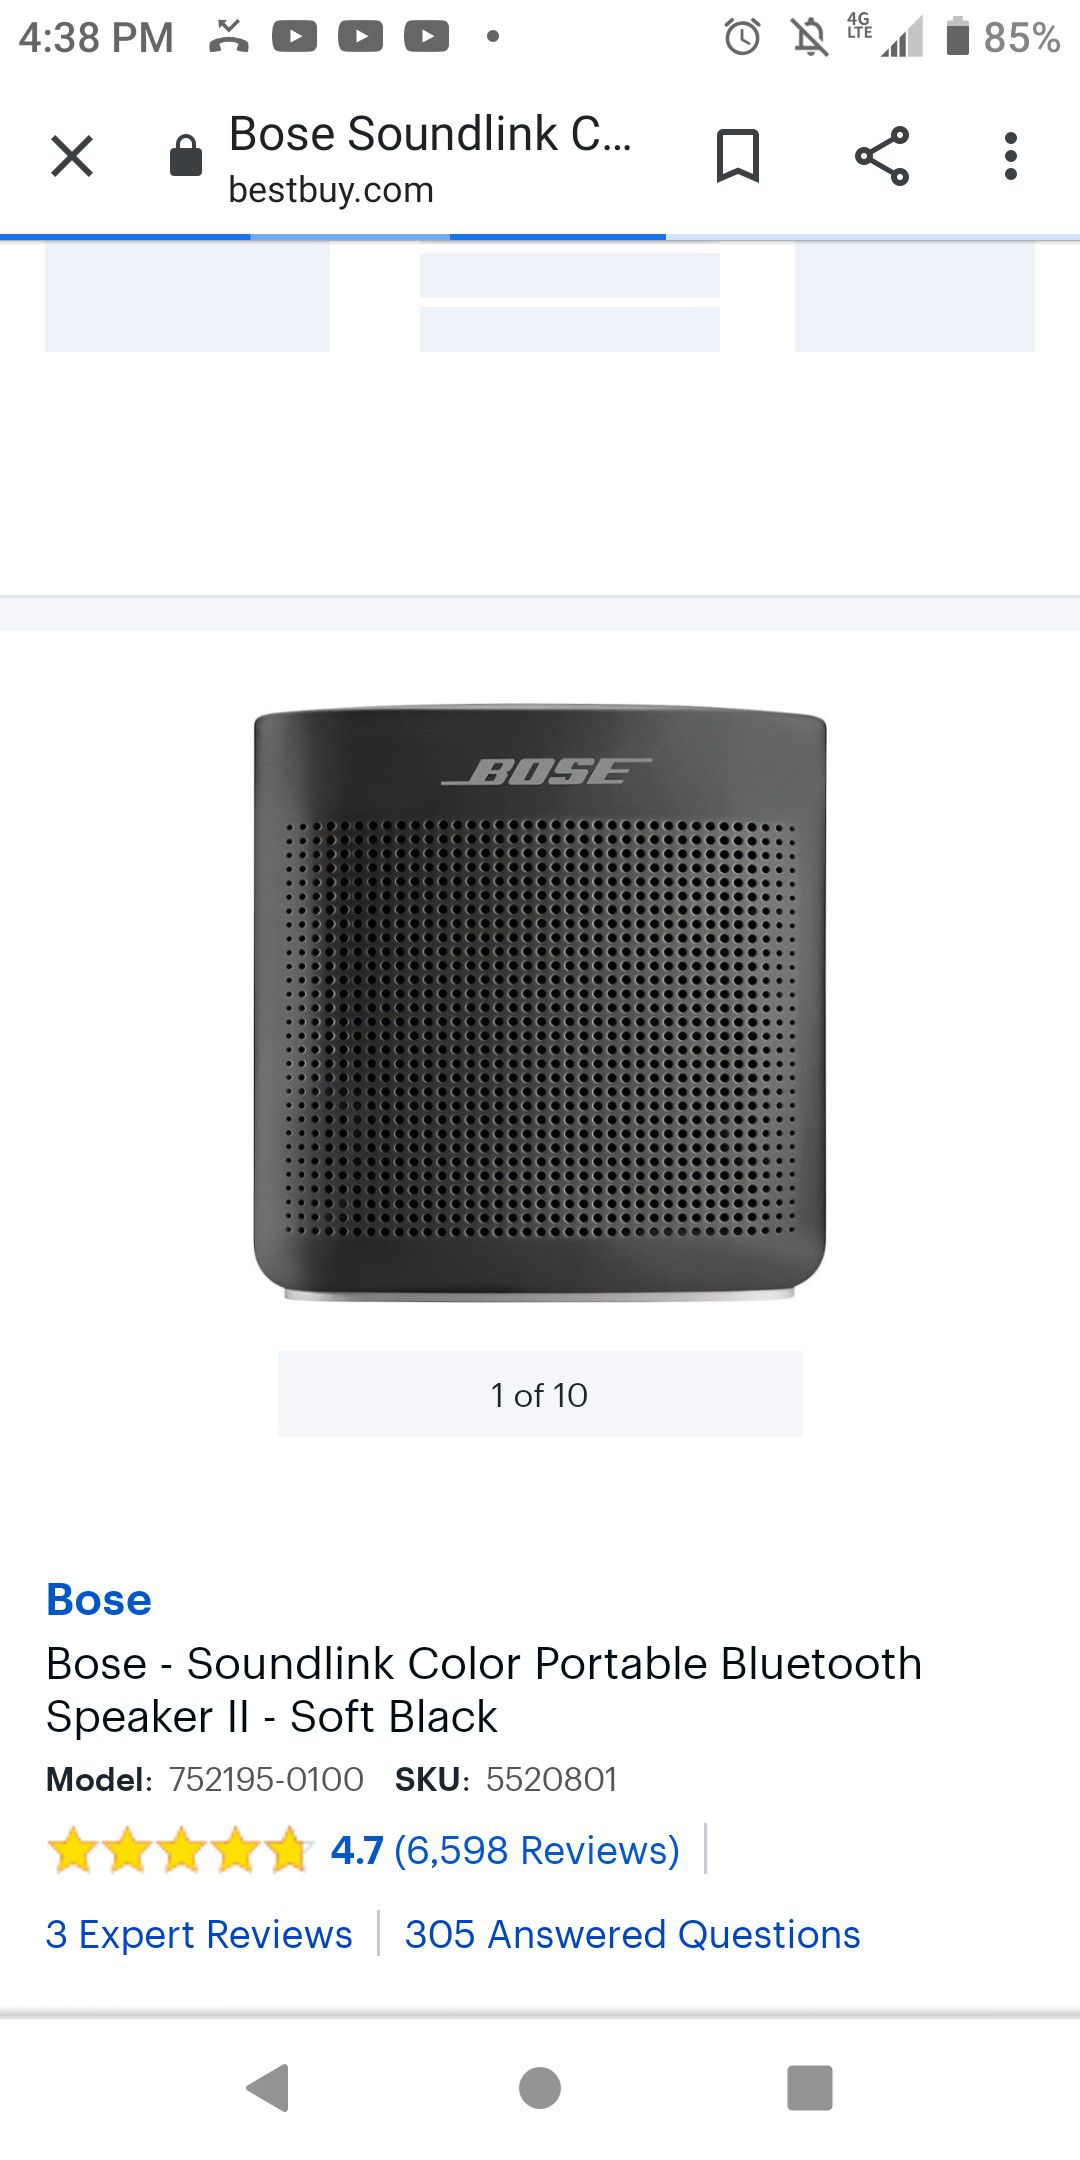 Bose- Brand new